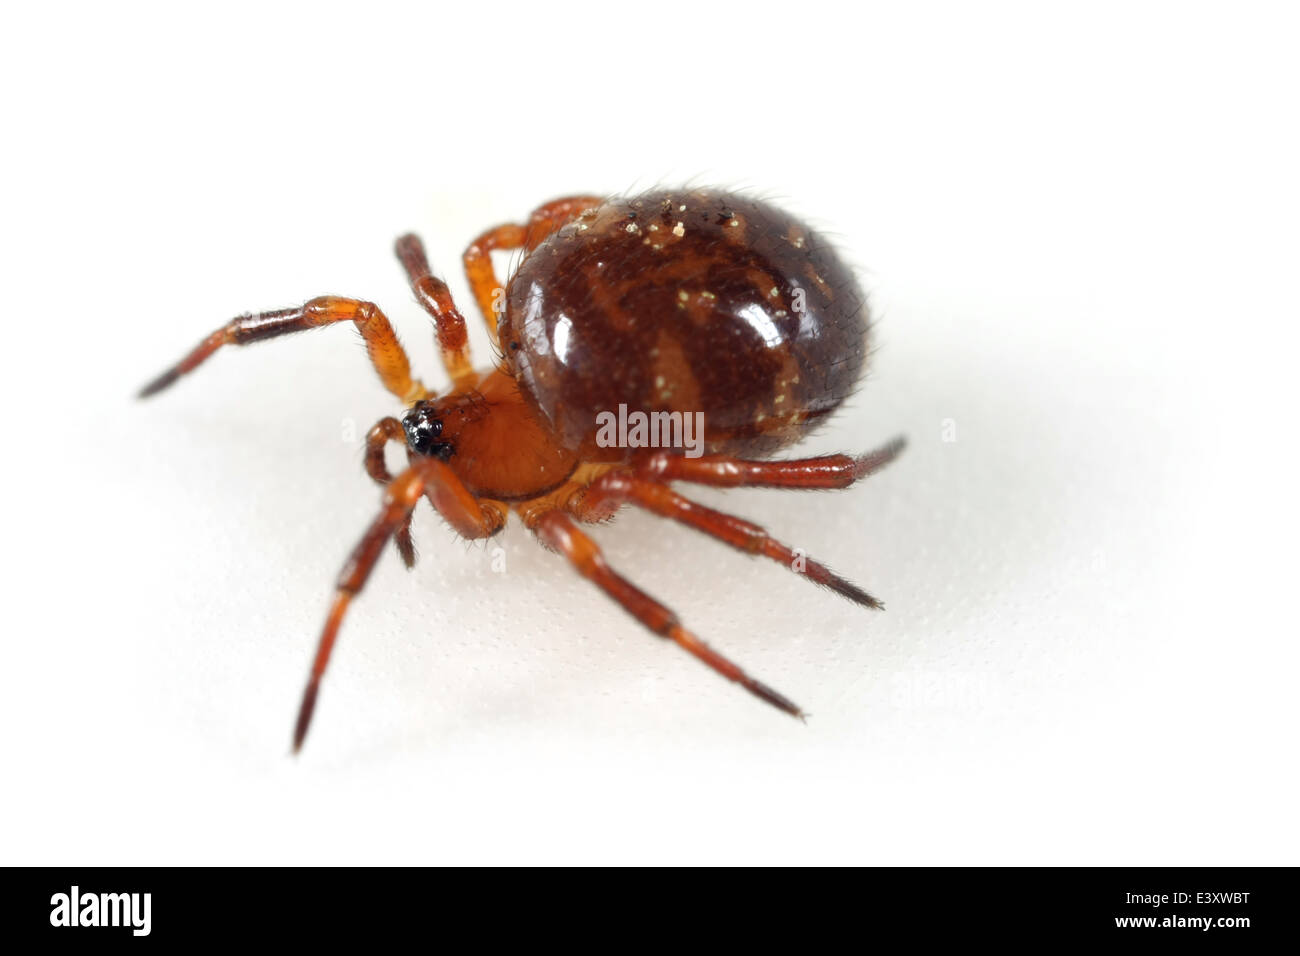 Female Euryopis flavomaculata spider, part of the family Theridiidae - Cobweb weavers. Isolated on white background. Stock Photo